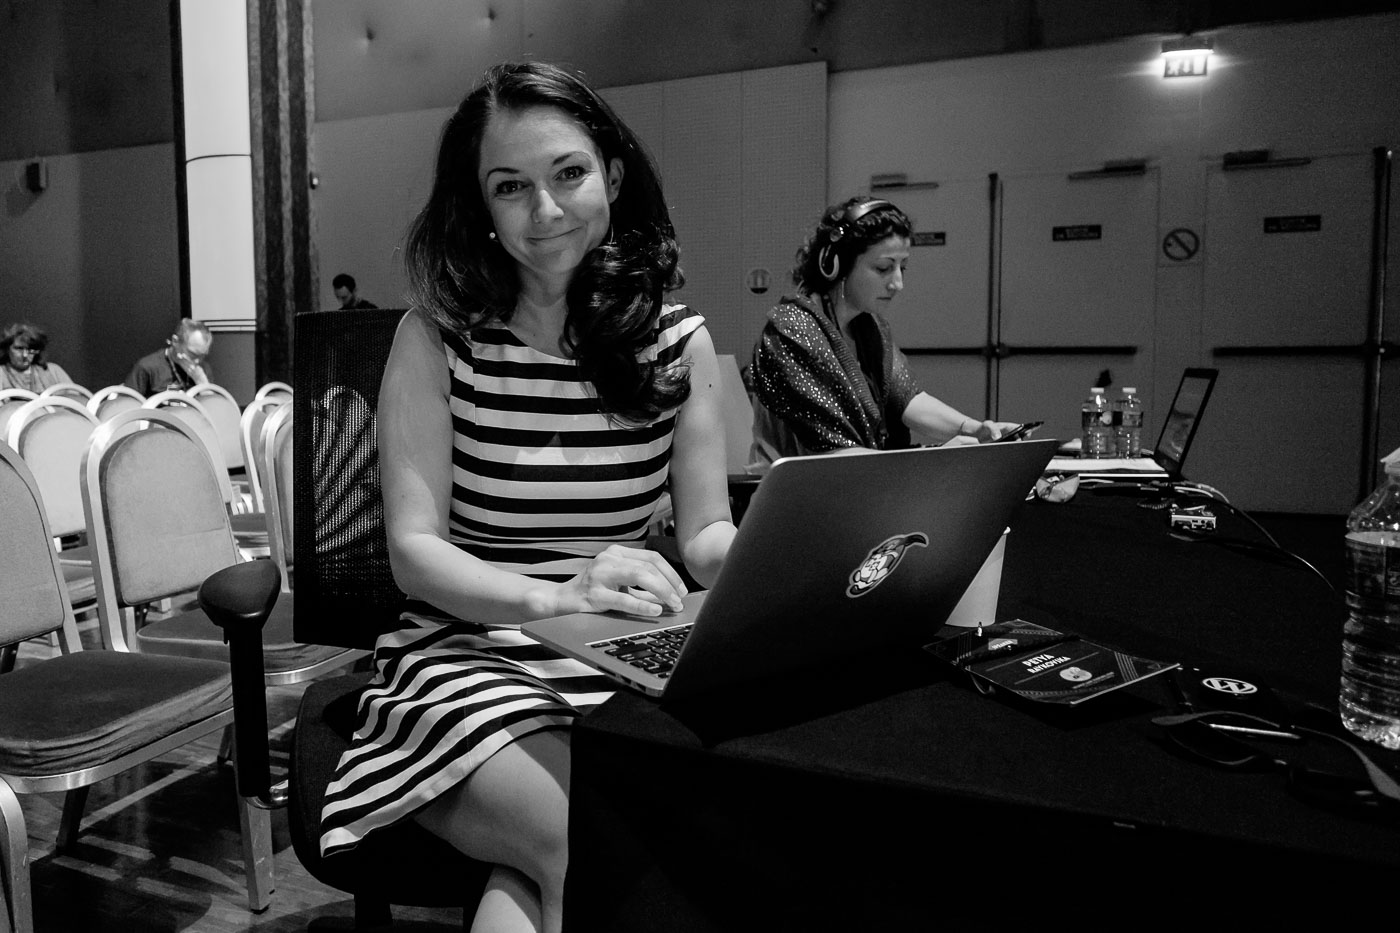 Petya sitting at her laptop smiling at the camera